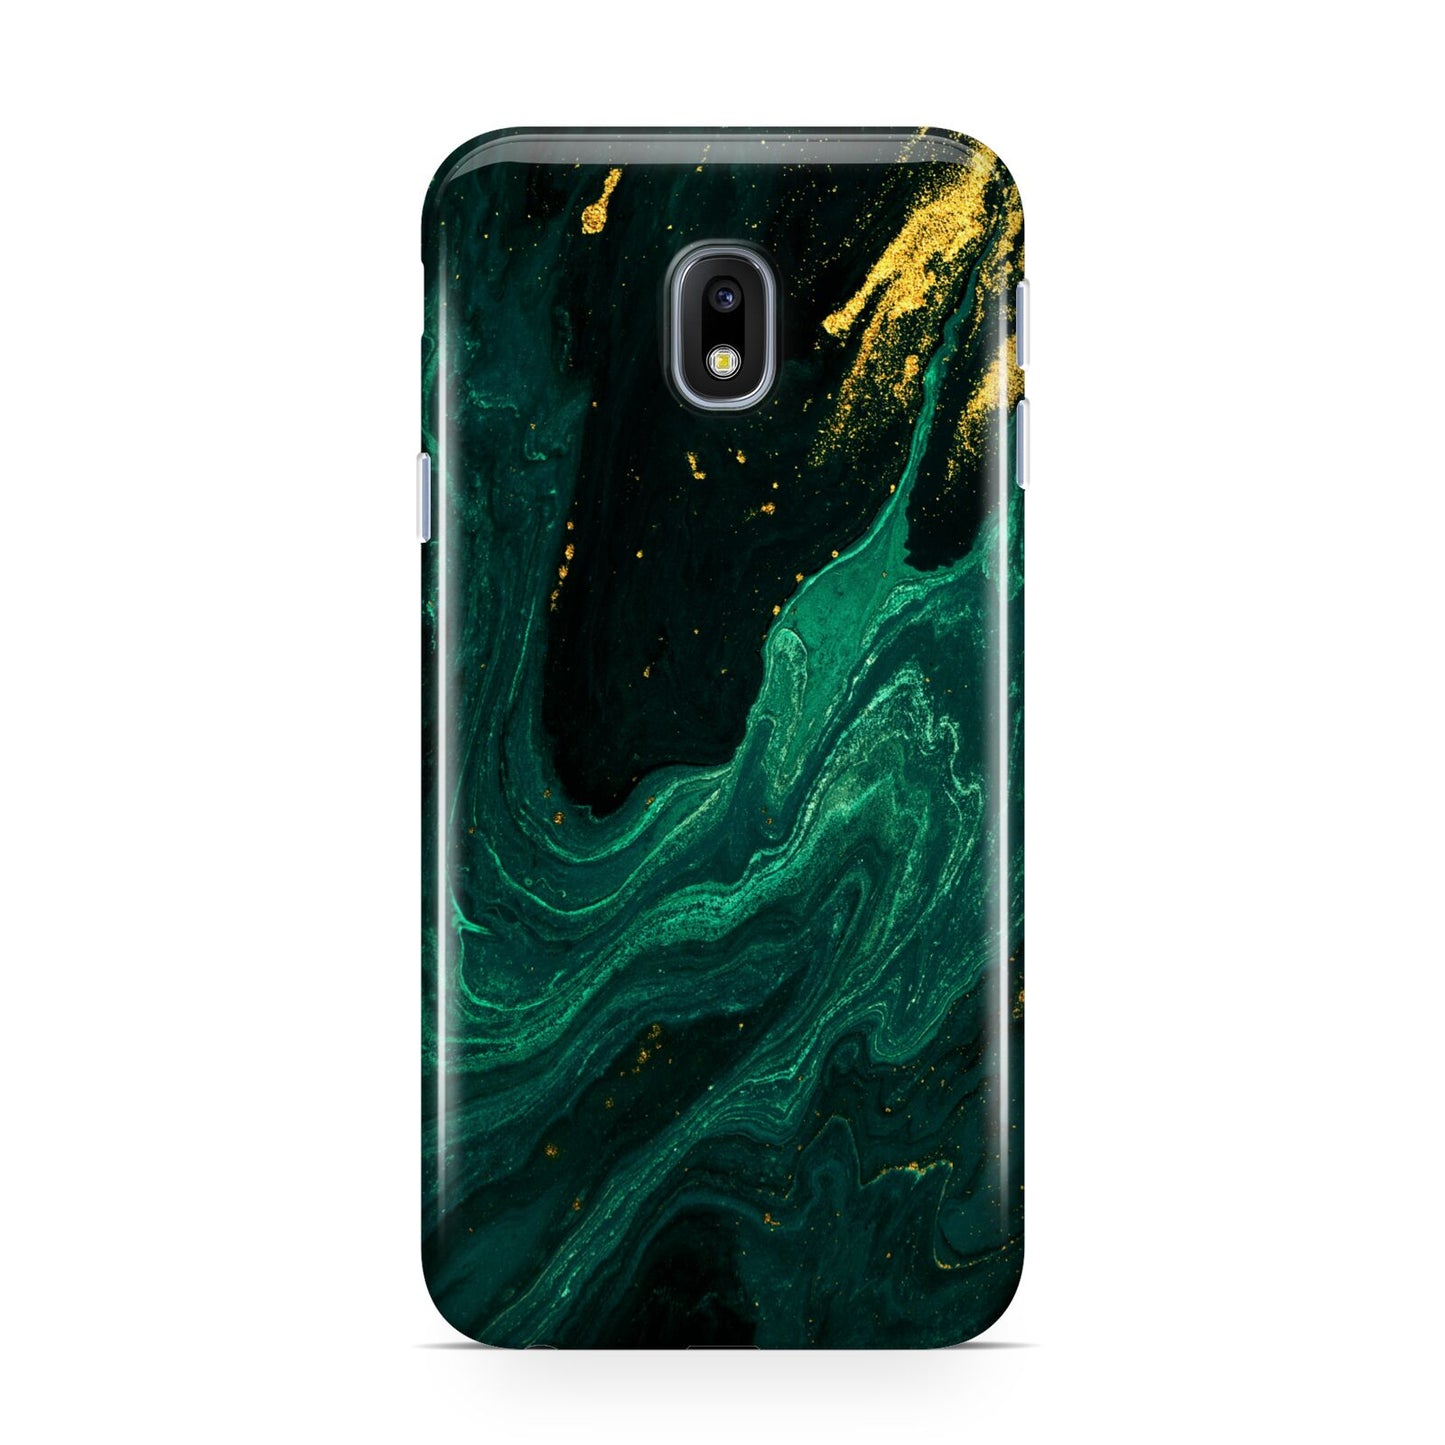 Emerald Green Samsung Galaxy J3 2017 Case